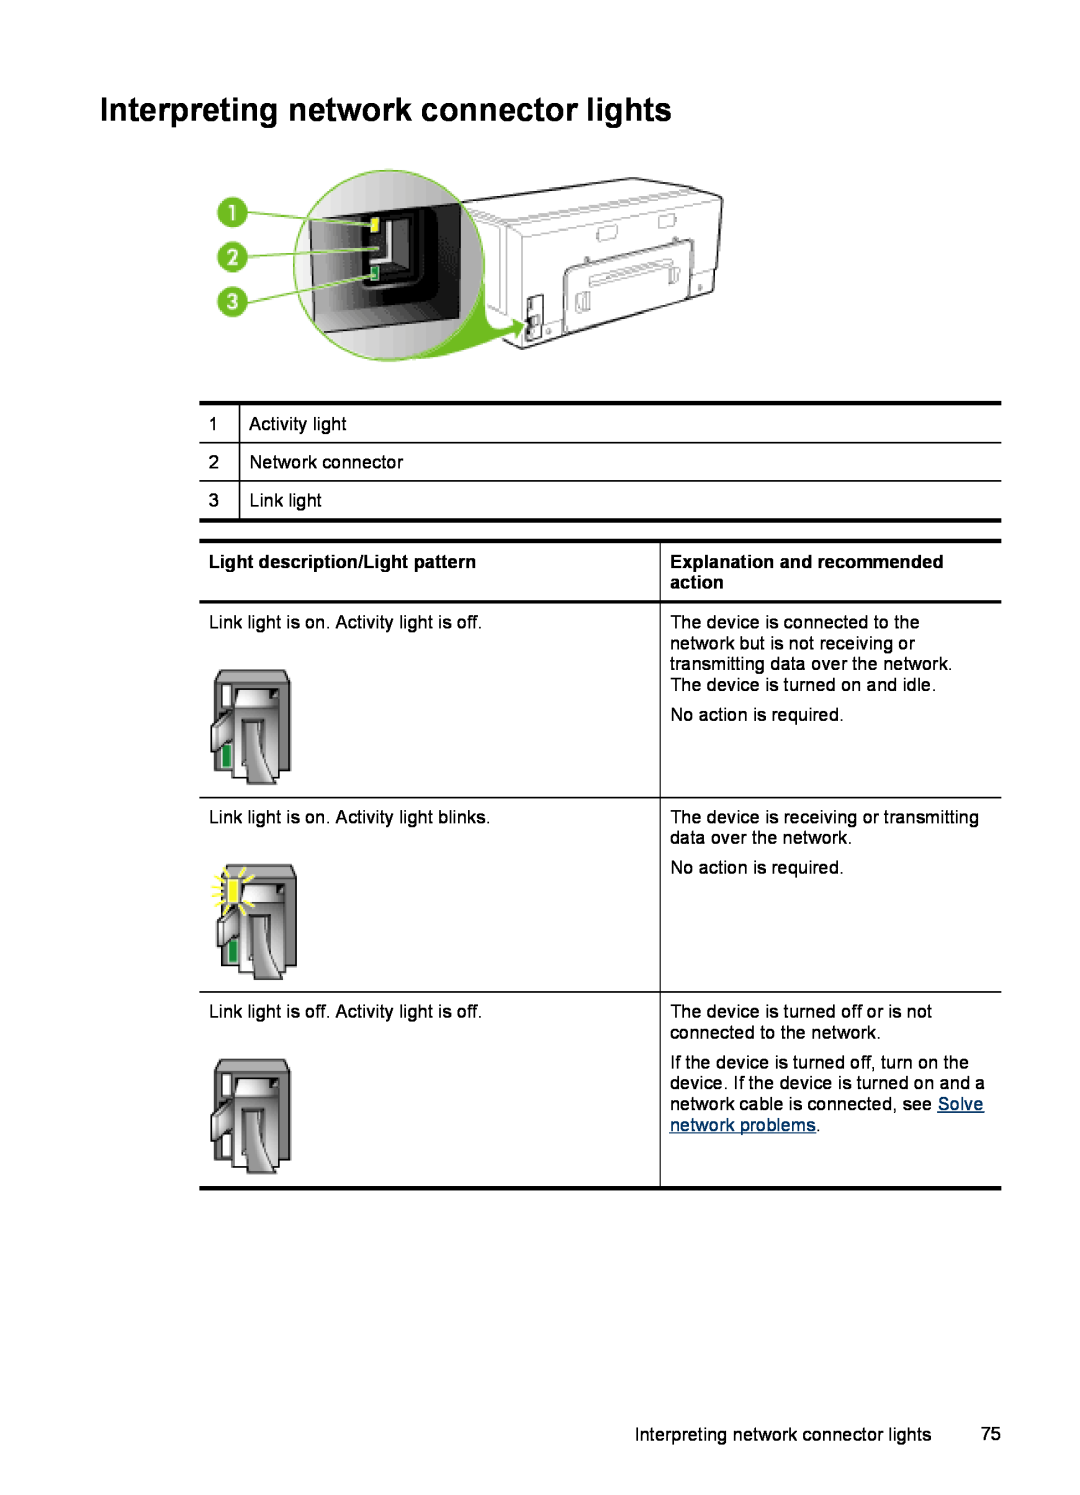 HP K5400, K5300 Interpreting network connector lights, Light description/Light pattern, Explanation and recommended action 